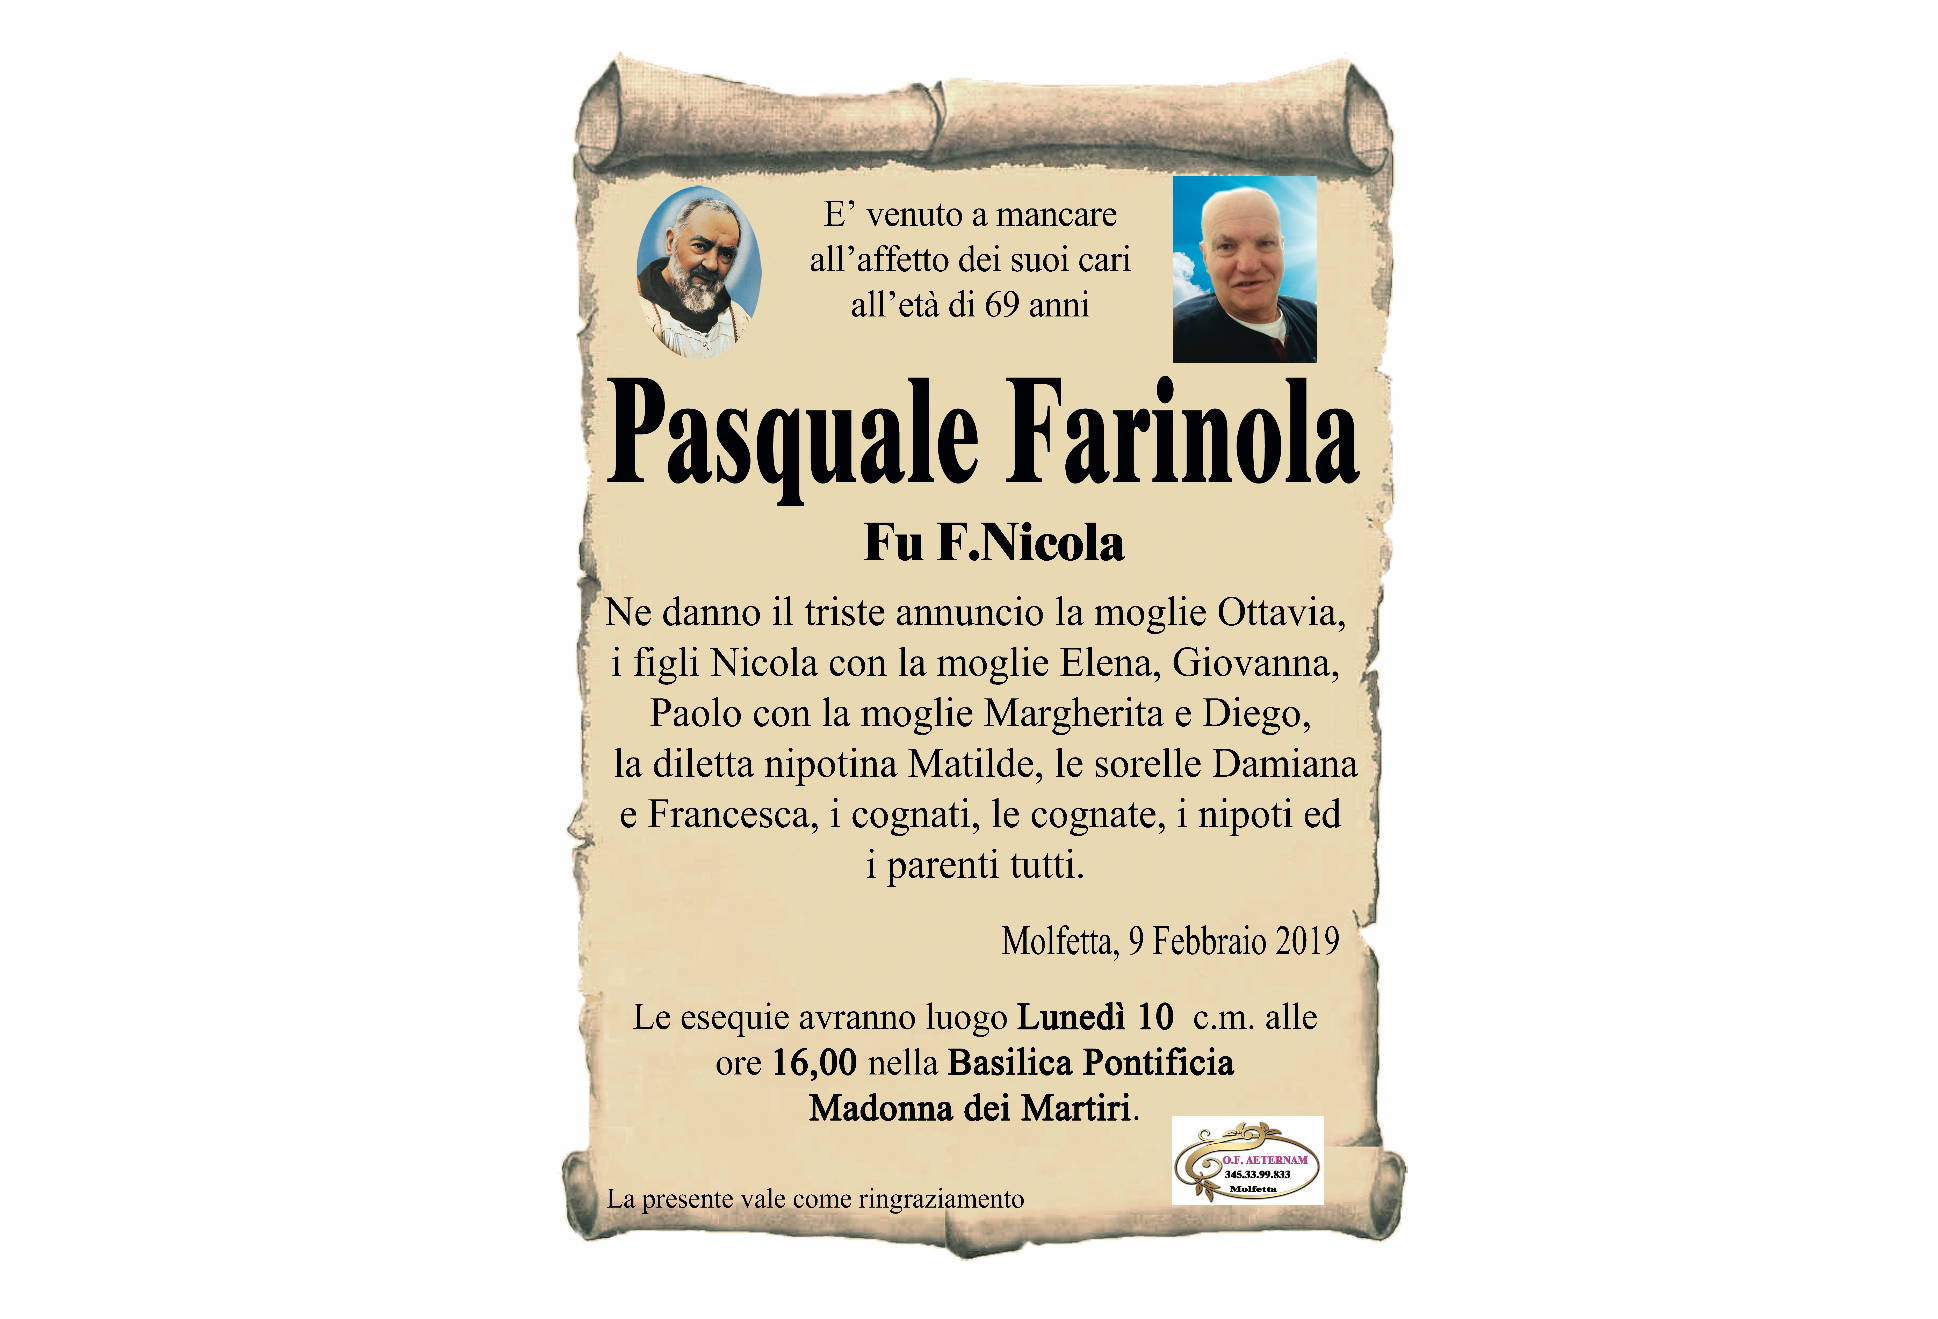 Pasquale Farinola